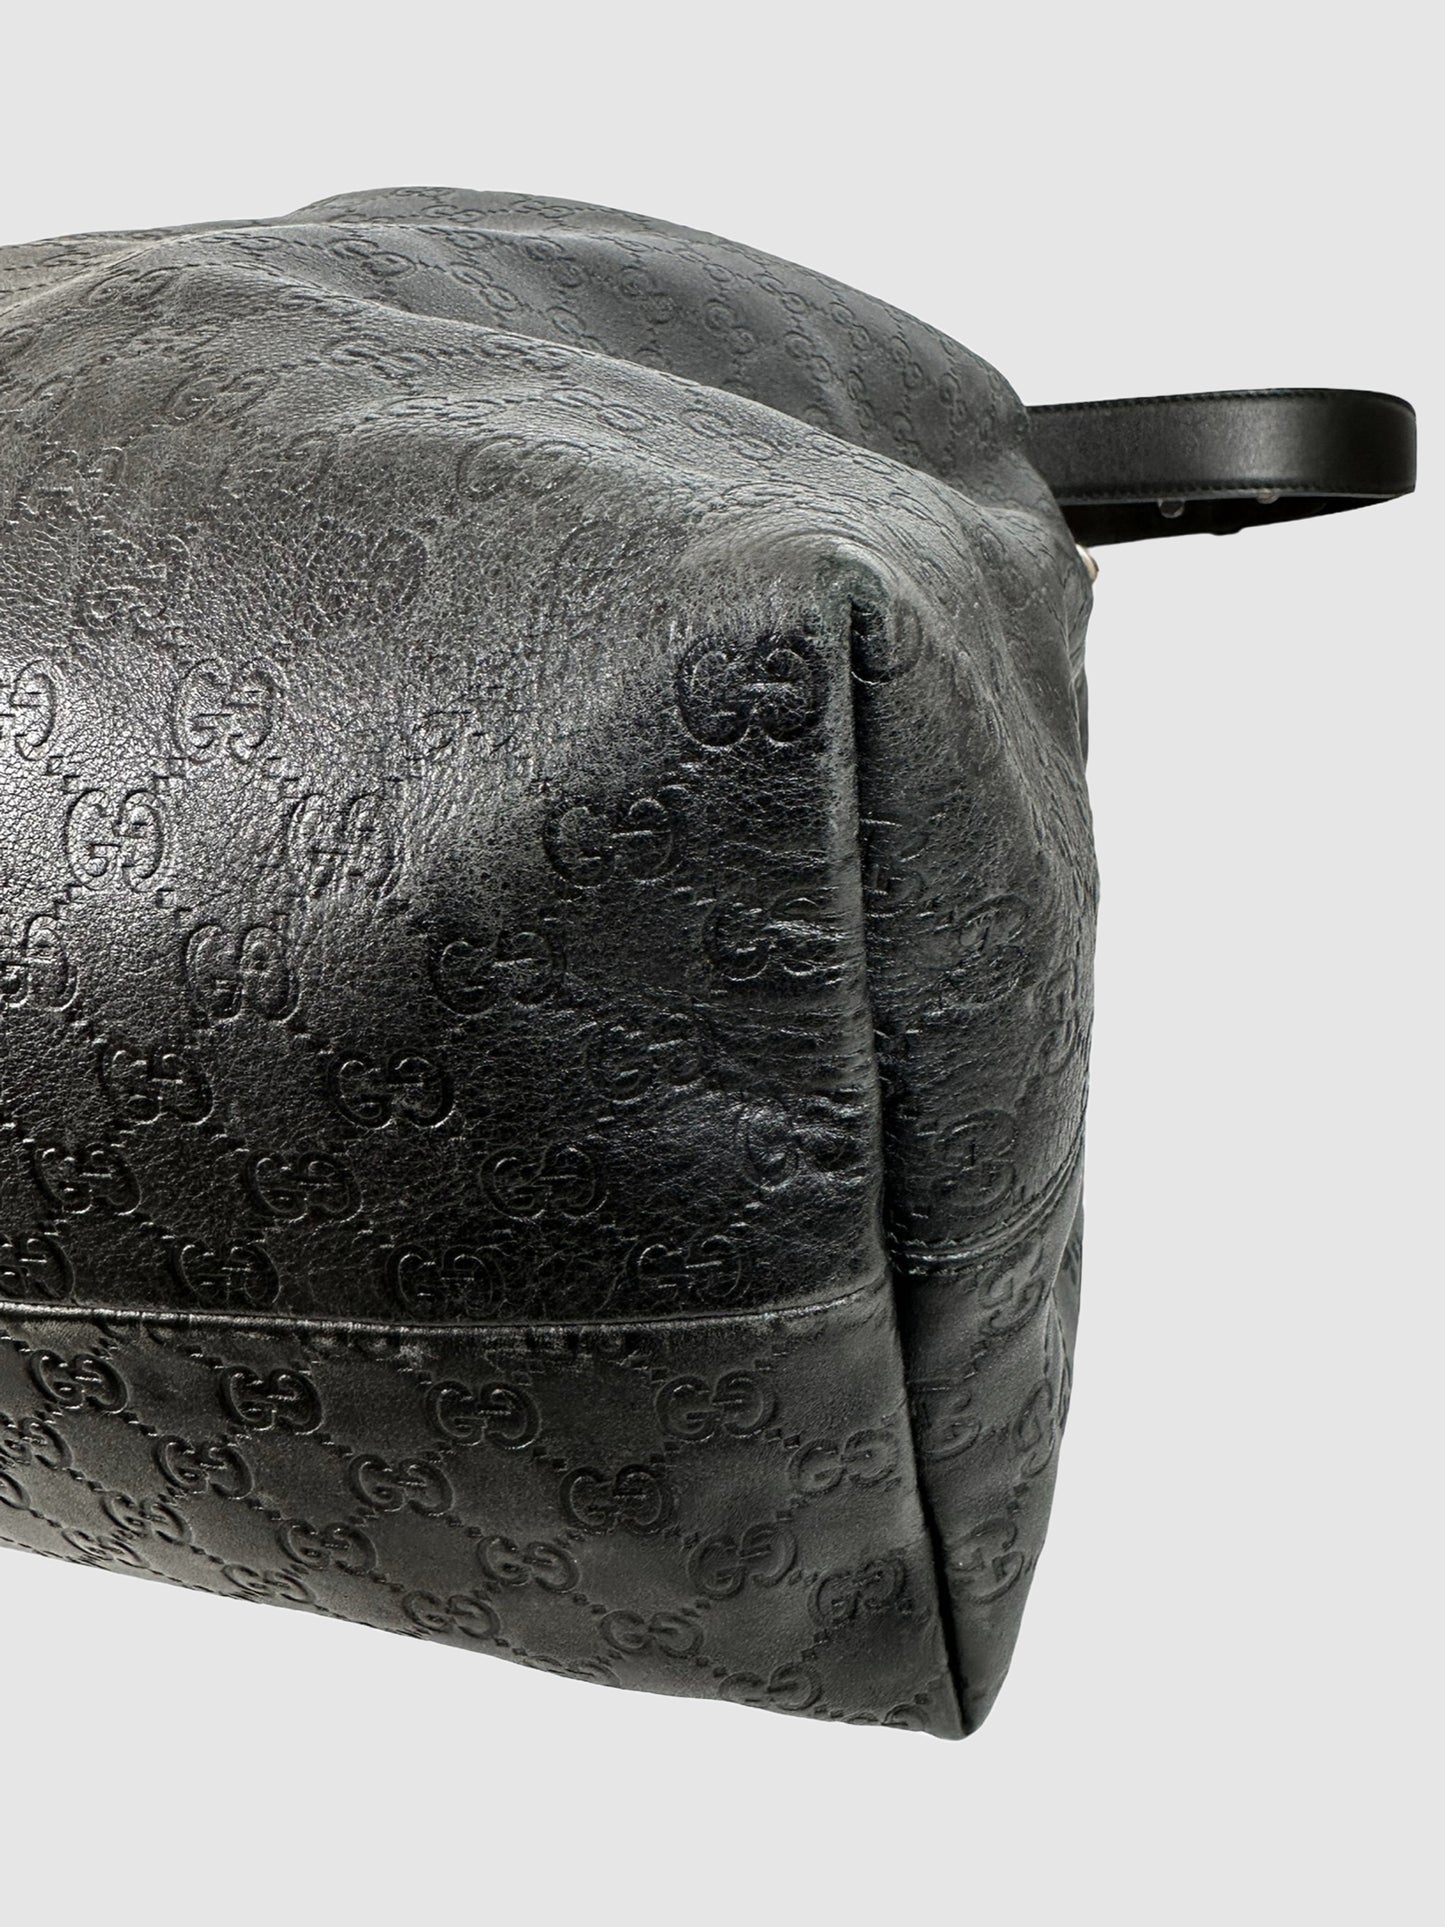 Guccissima Leather Hobo Bag